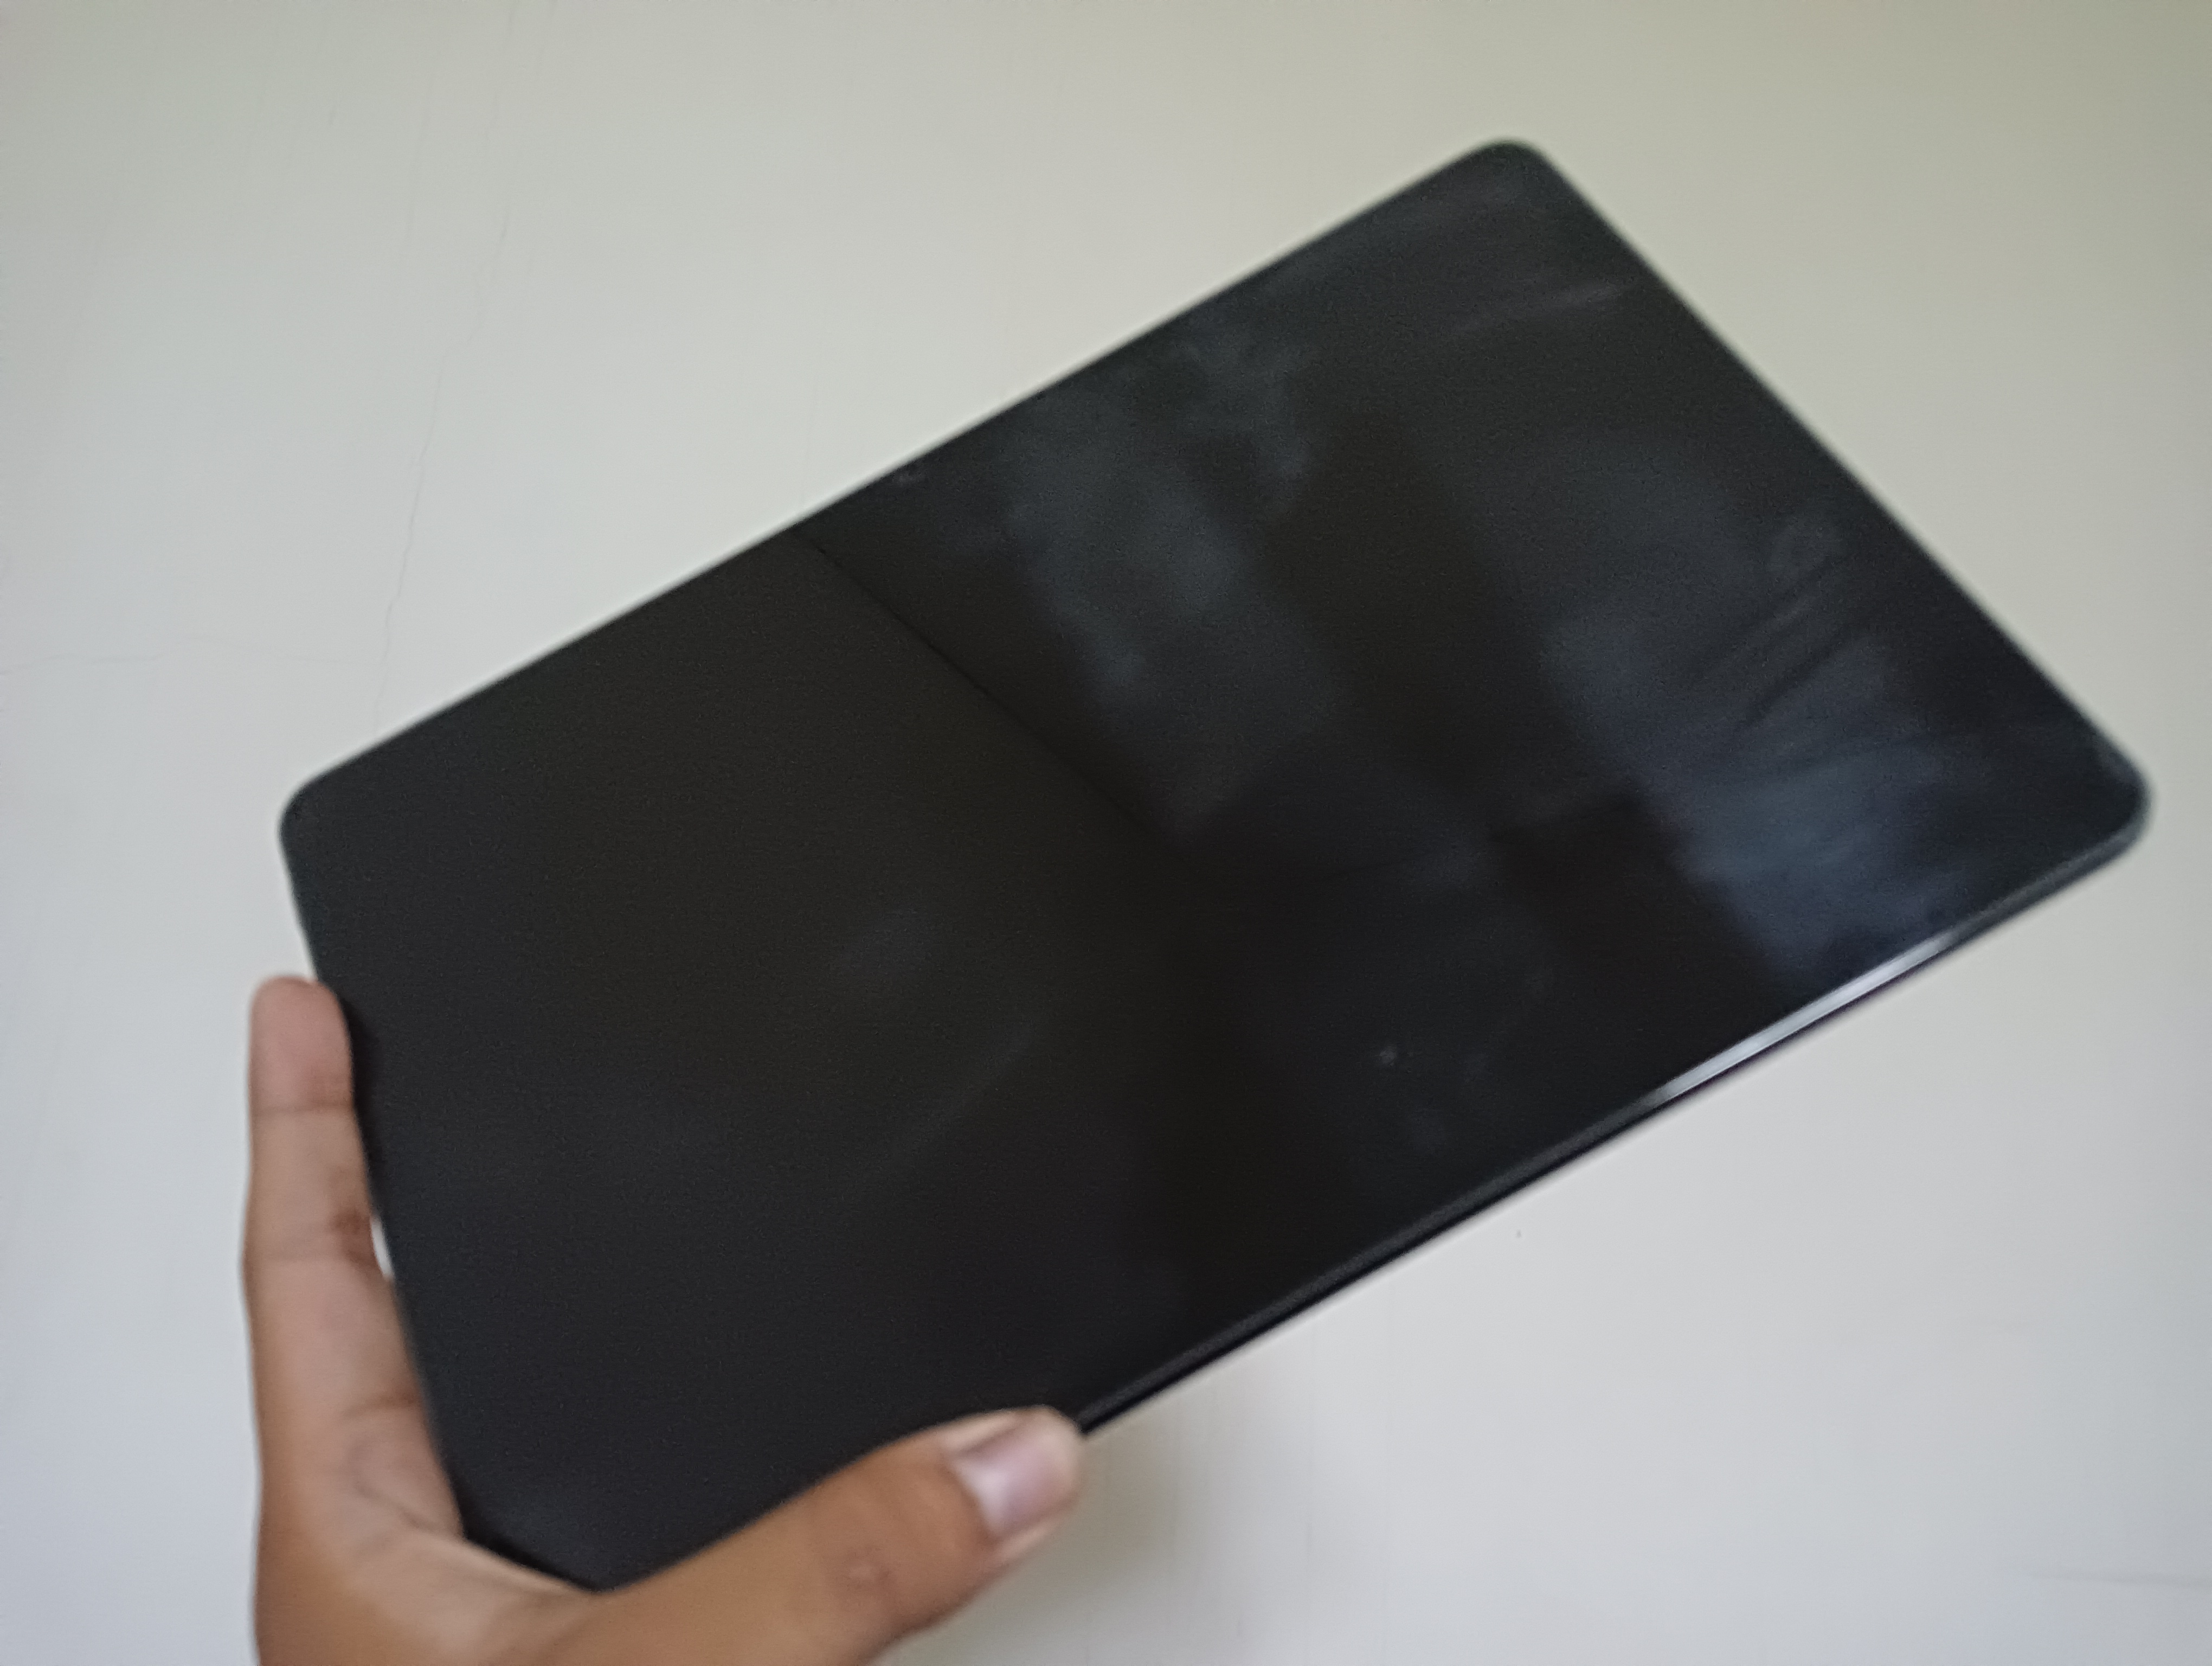 Googleの機能がない『Huawei MatePad 11』を紹介ついでにレビュー